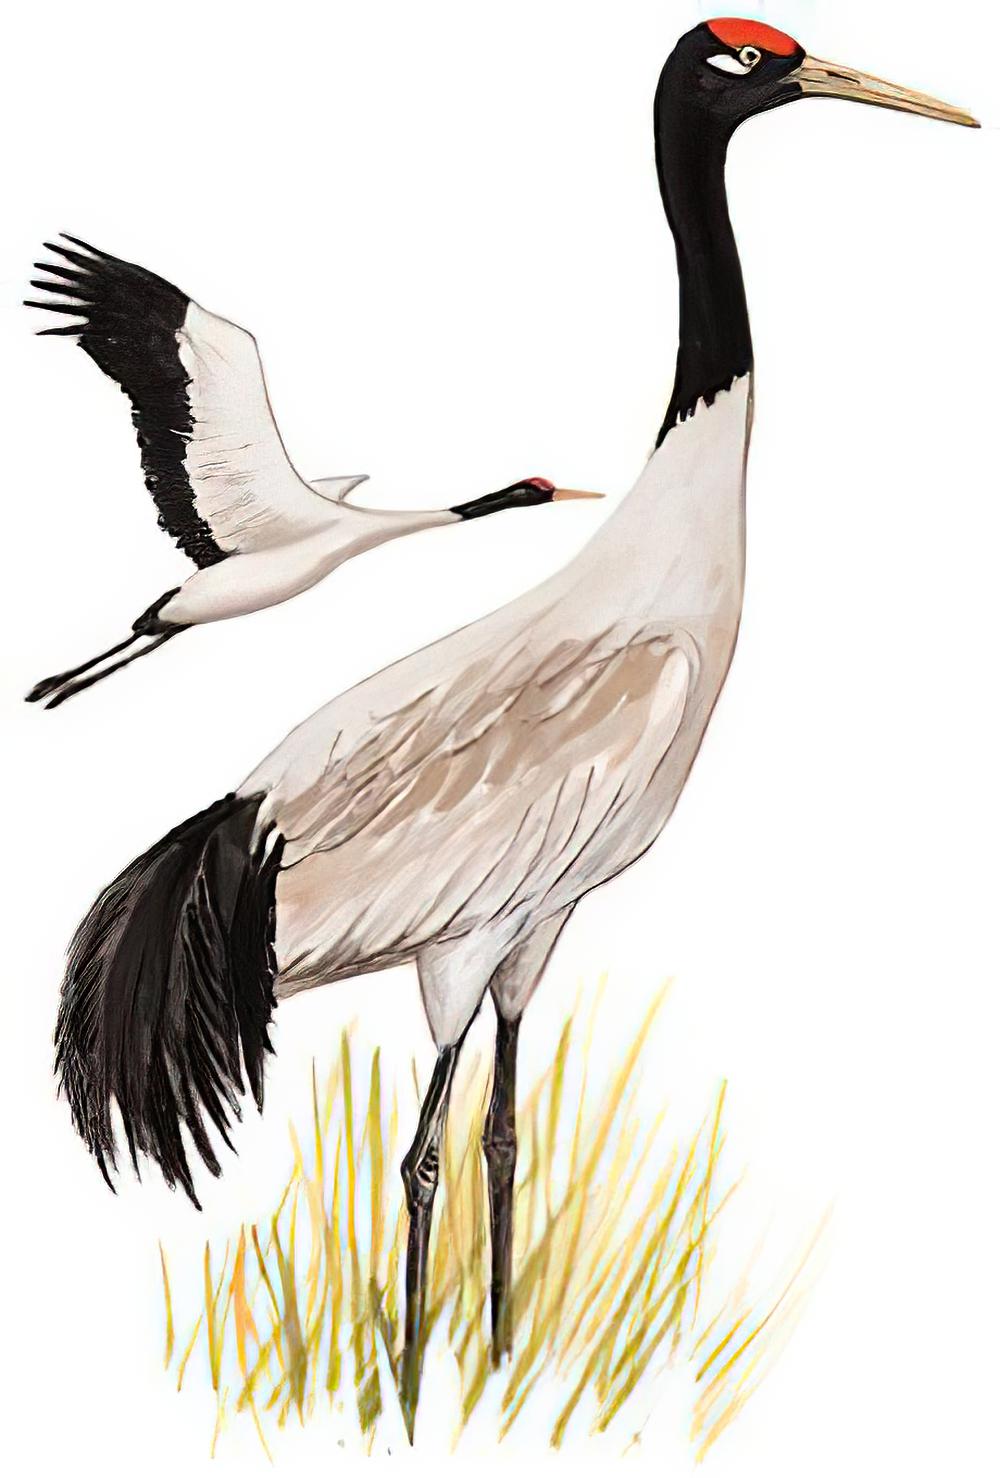 黑颈鹤 / Black-necked Crane / Grus nigricollis